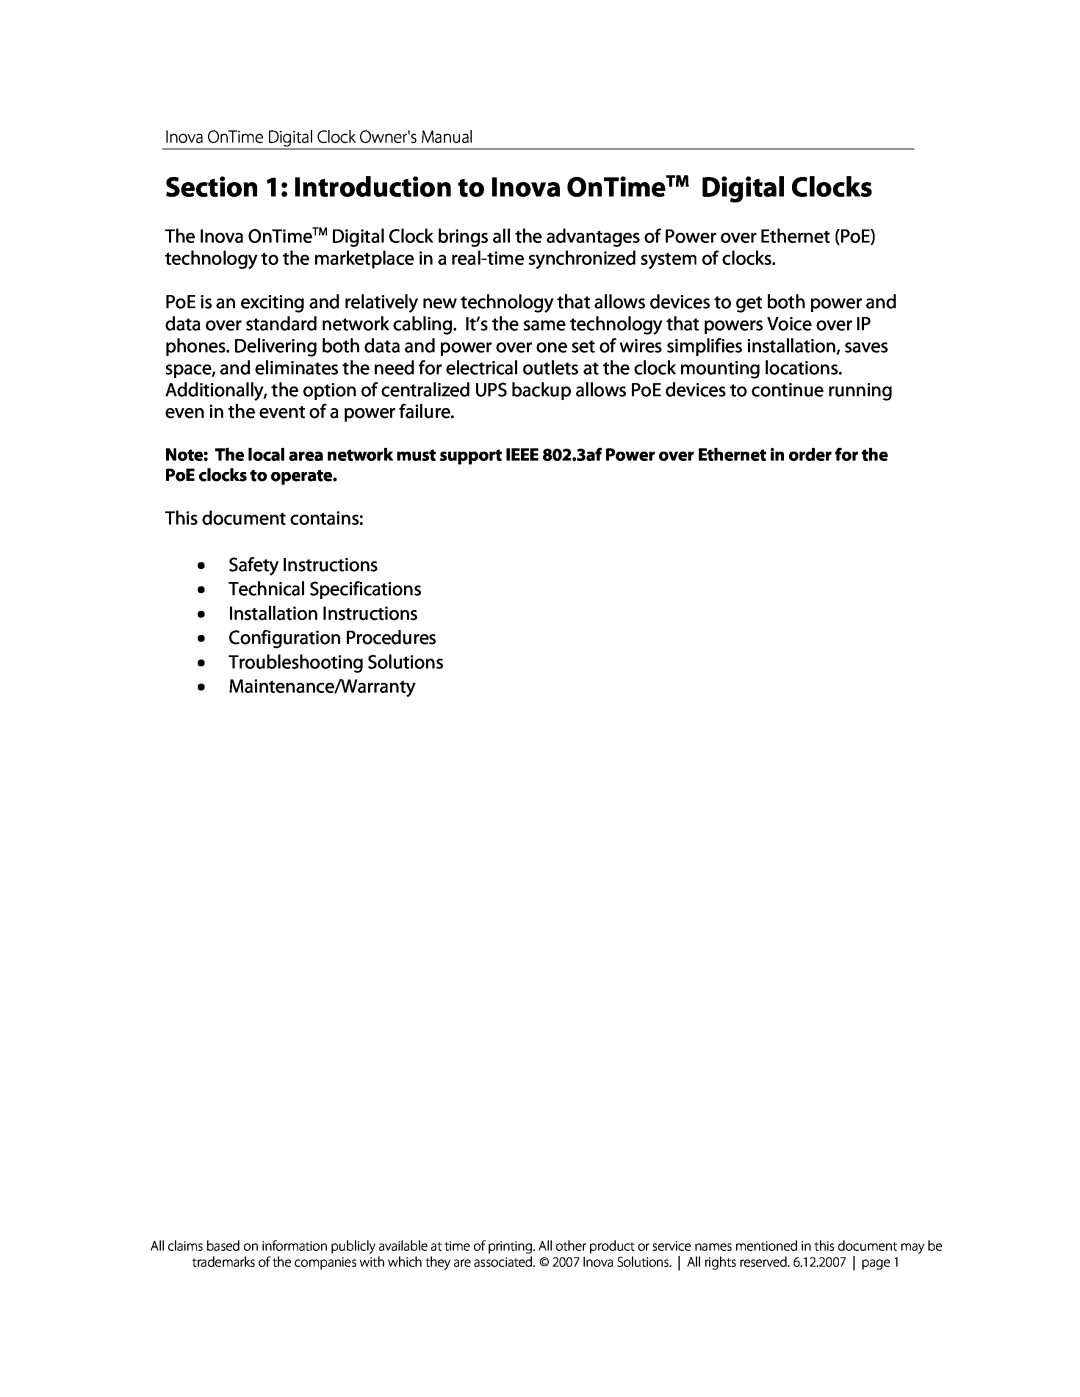 Inova owner manual Introduction to Inova OnTimeTM Digital Clocks 